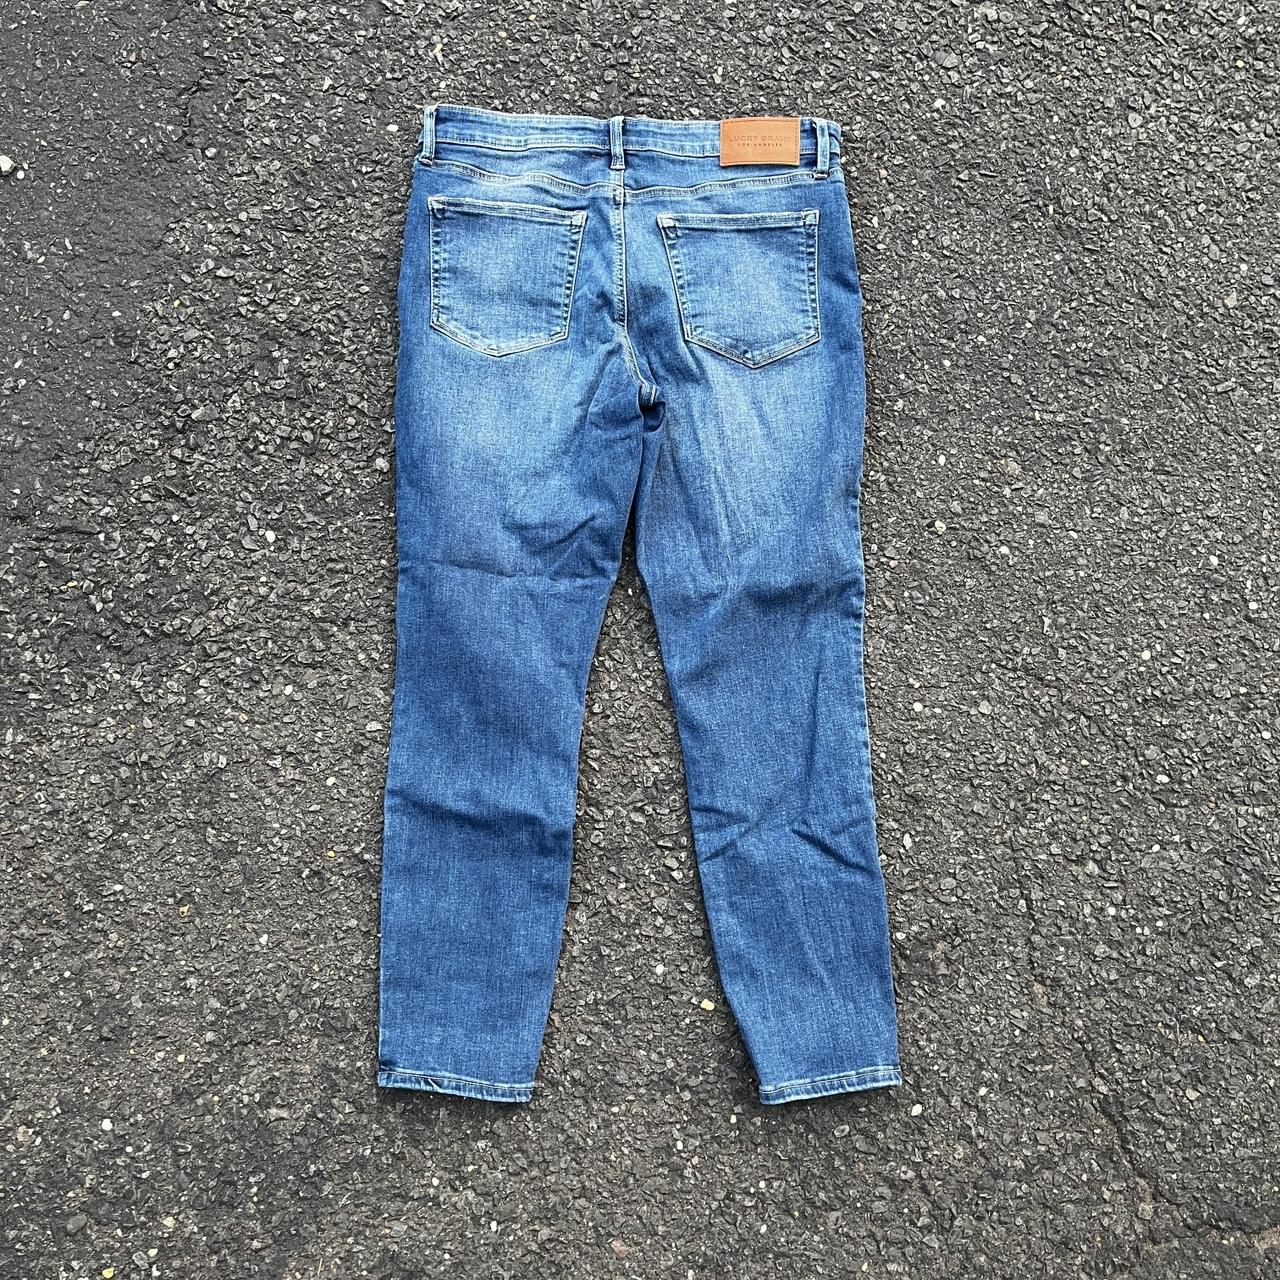 Lucky Brand Jeans Los Angeles Blue 36x34 412 - Depop